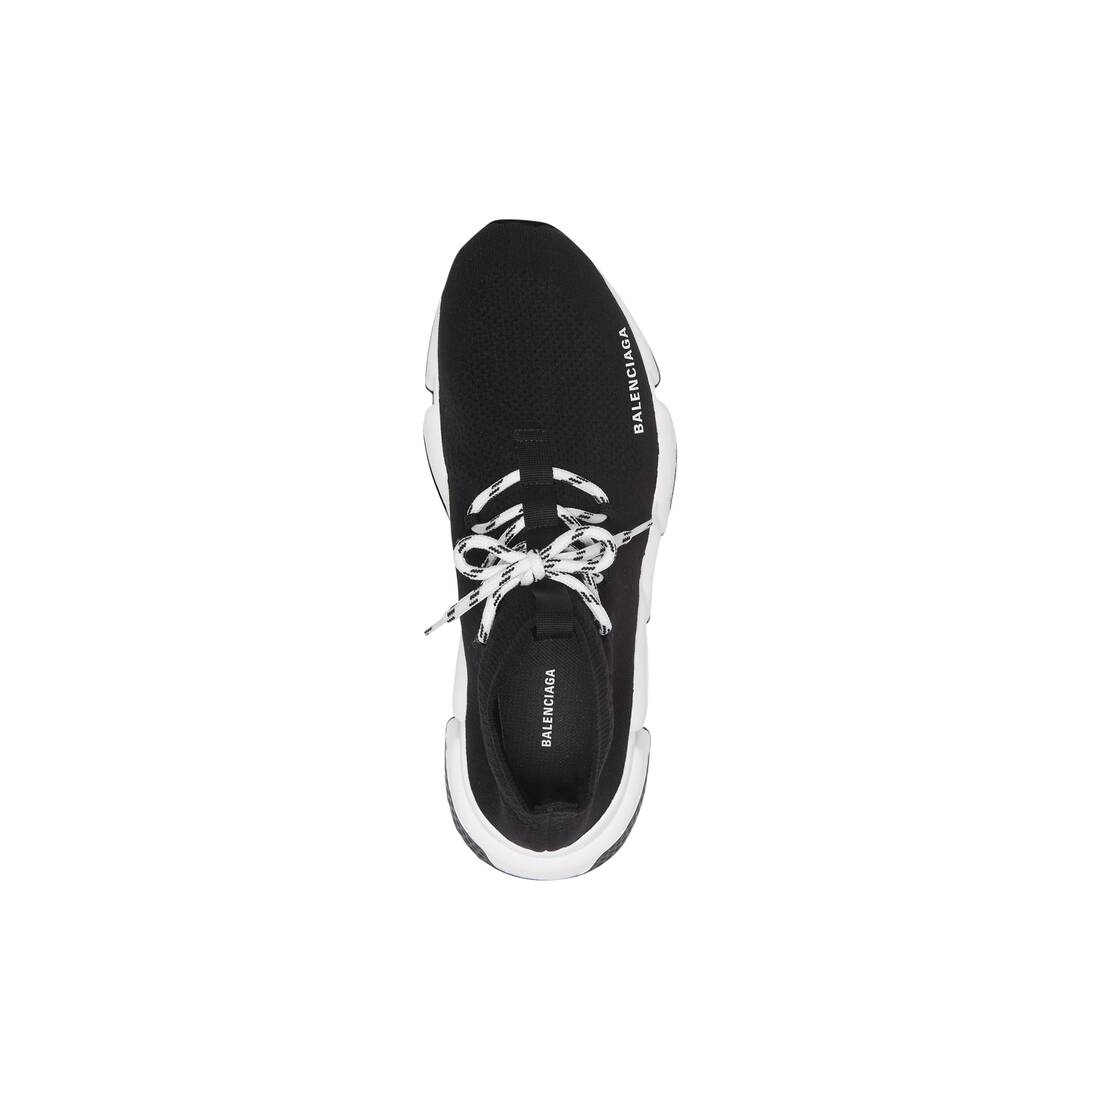 Men's Speed Lace-up Sneaker in Black/white - 4